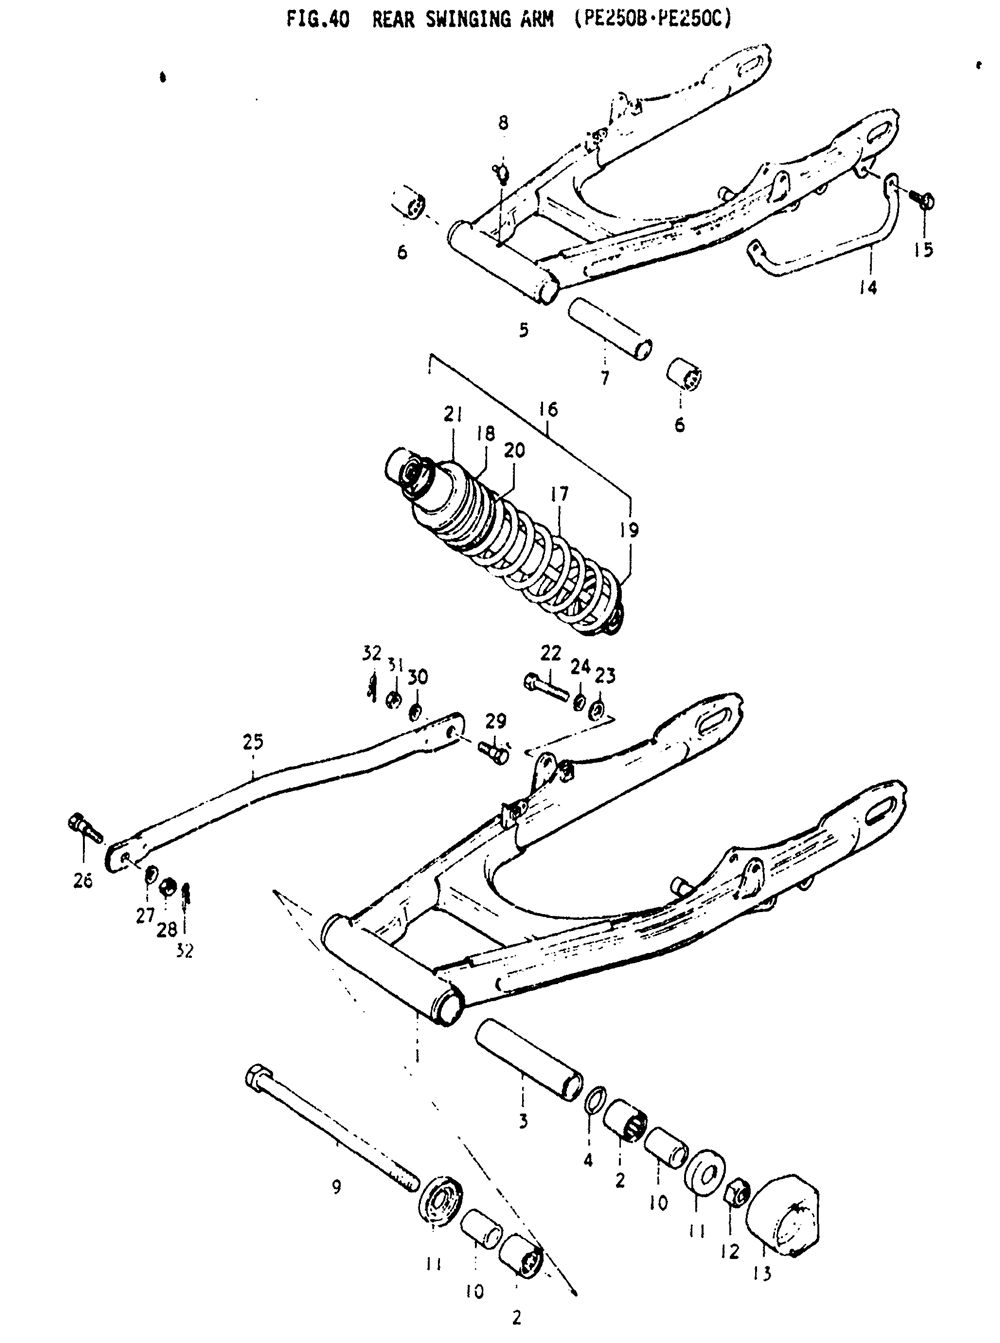 Rear swinging arm (pe250b .pe250c)